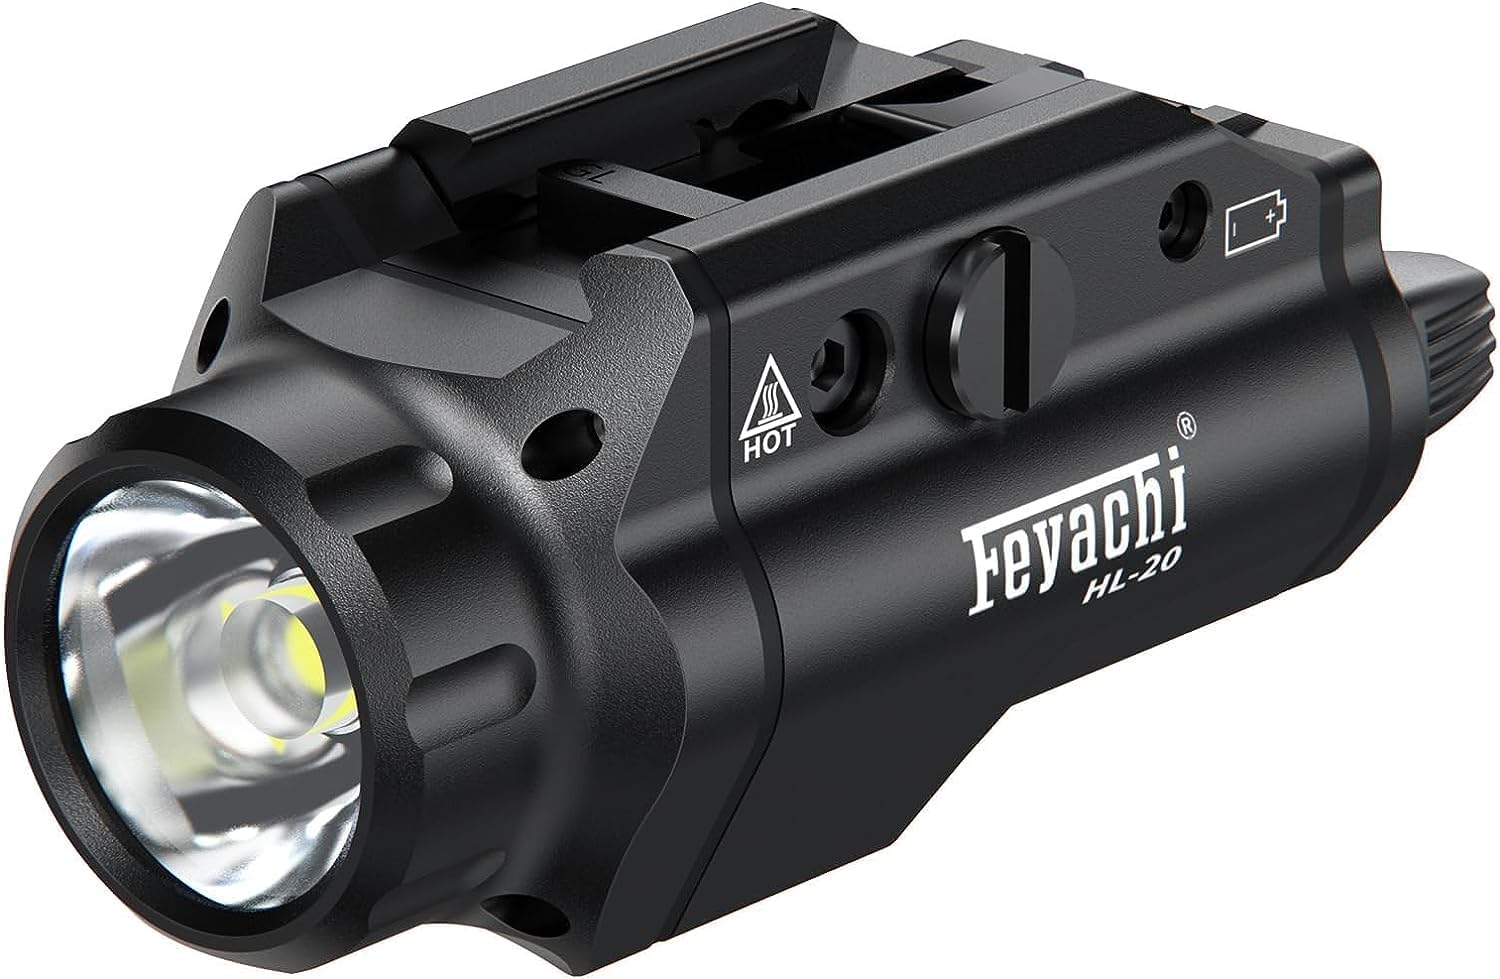 Feyachi HL-20 Pistol Light 1500 Lumen Upgrade LED Weapon Light Compact Rail Mounted Handgun Tactical Flashlight Rail Locating Keys for Picatinny